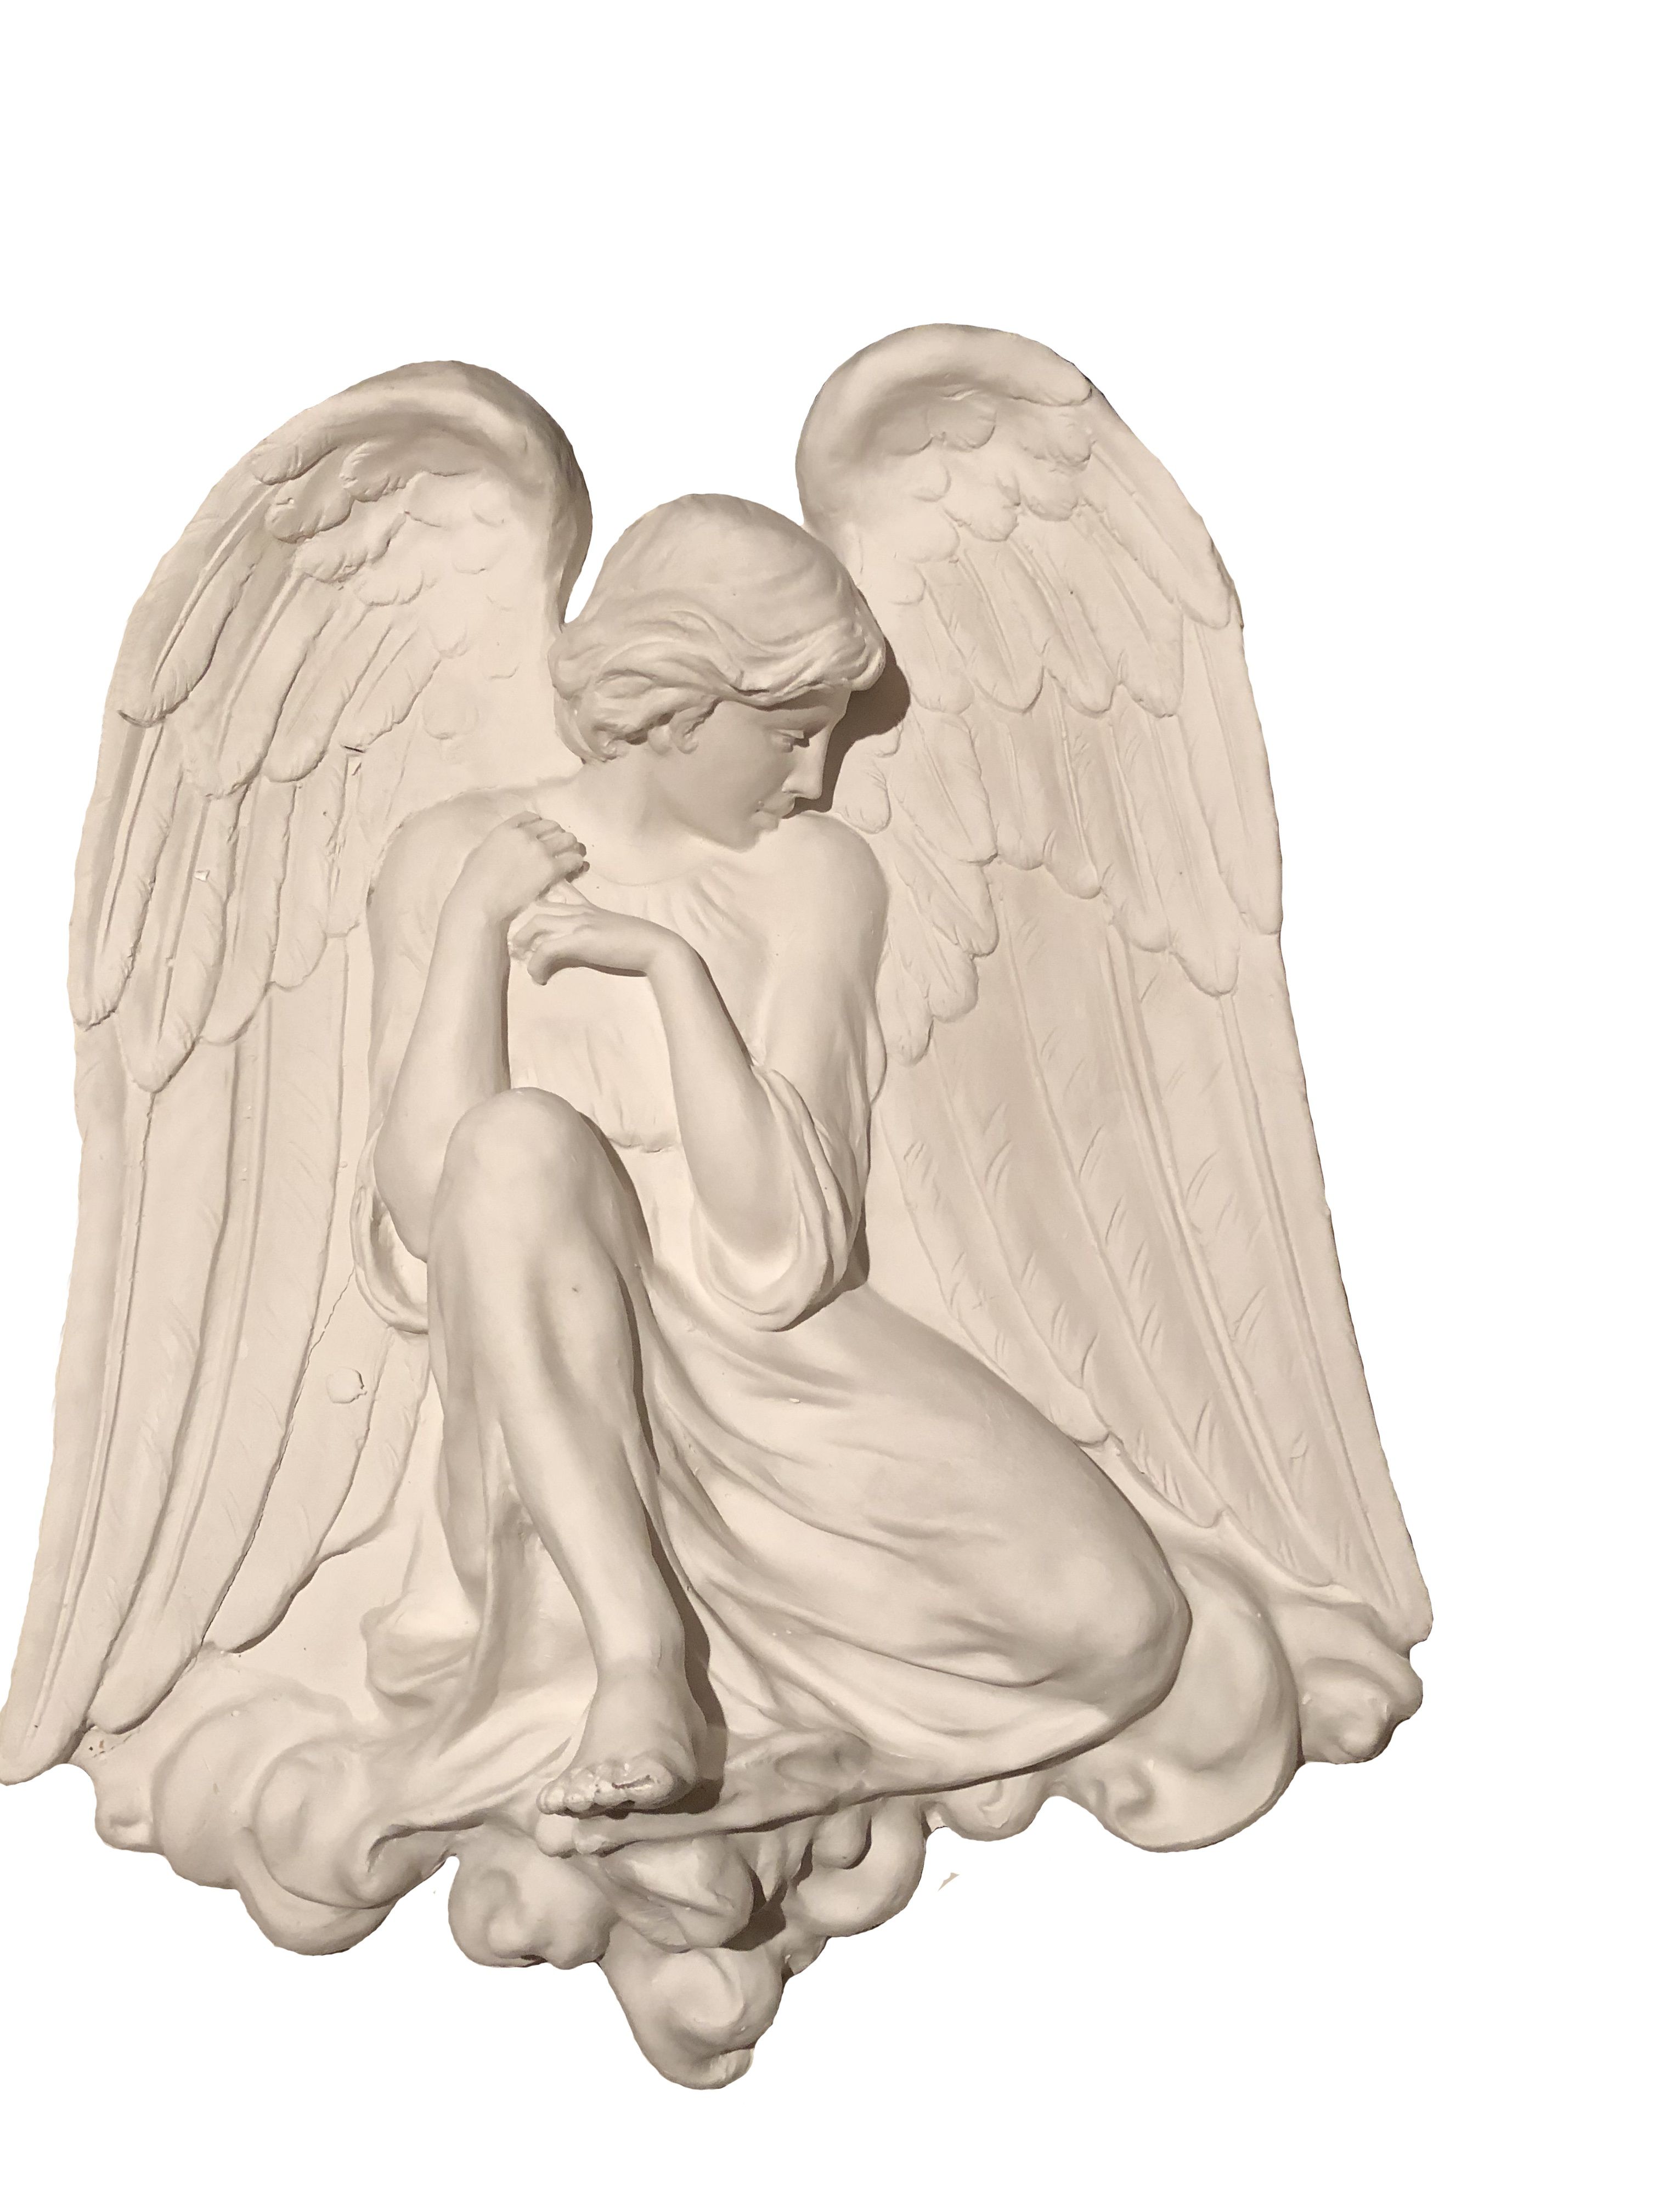 Anioł - Płaskorzeźba nagrobna - 60 cm - P44